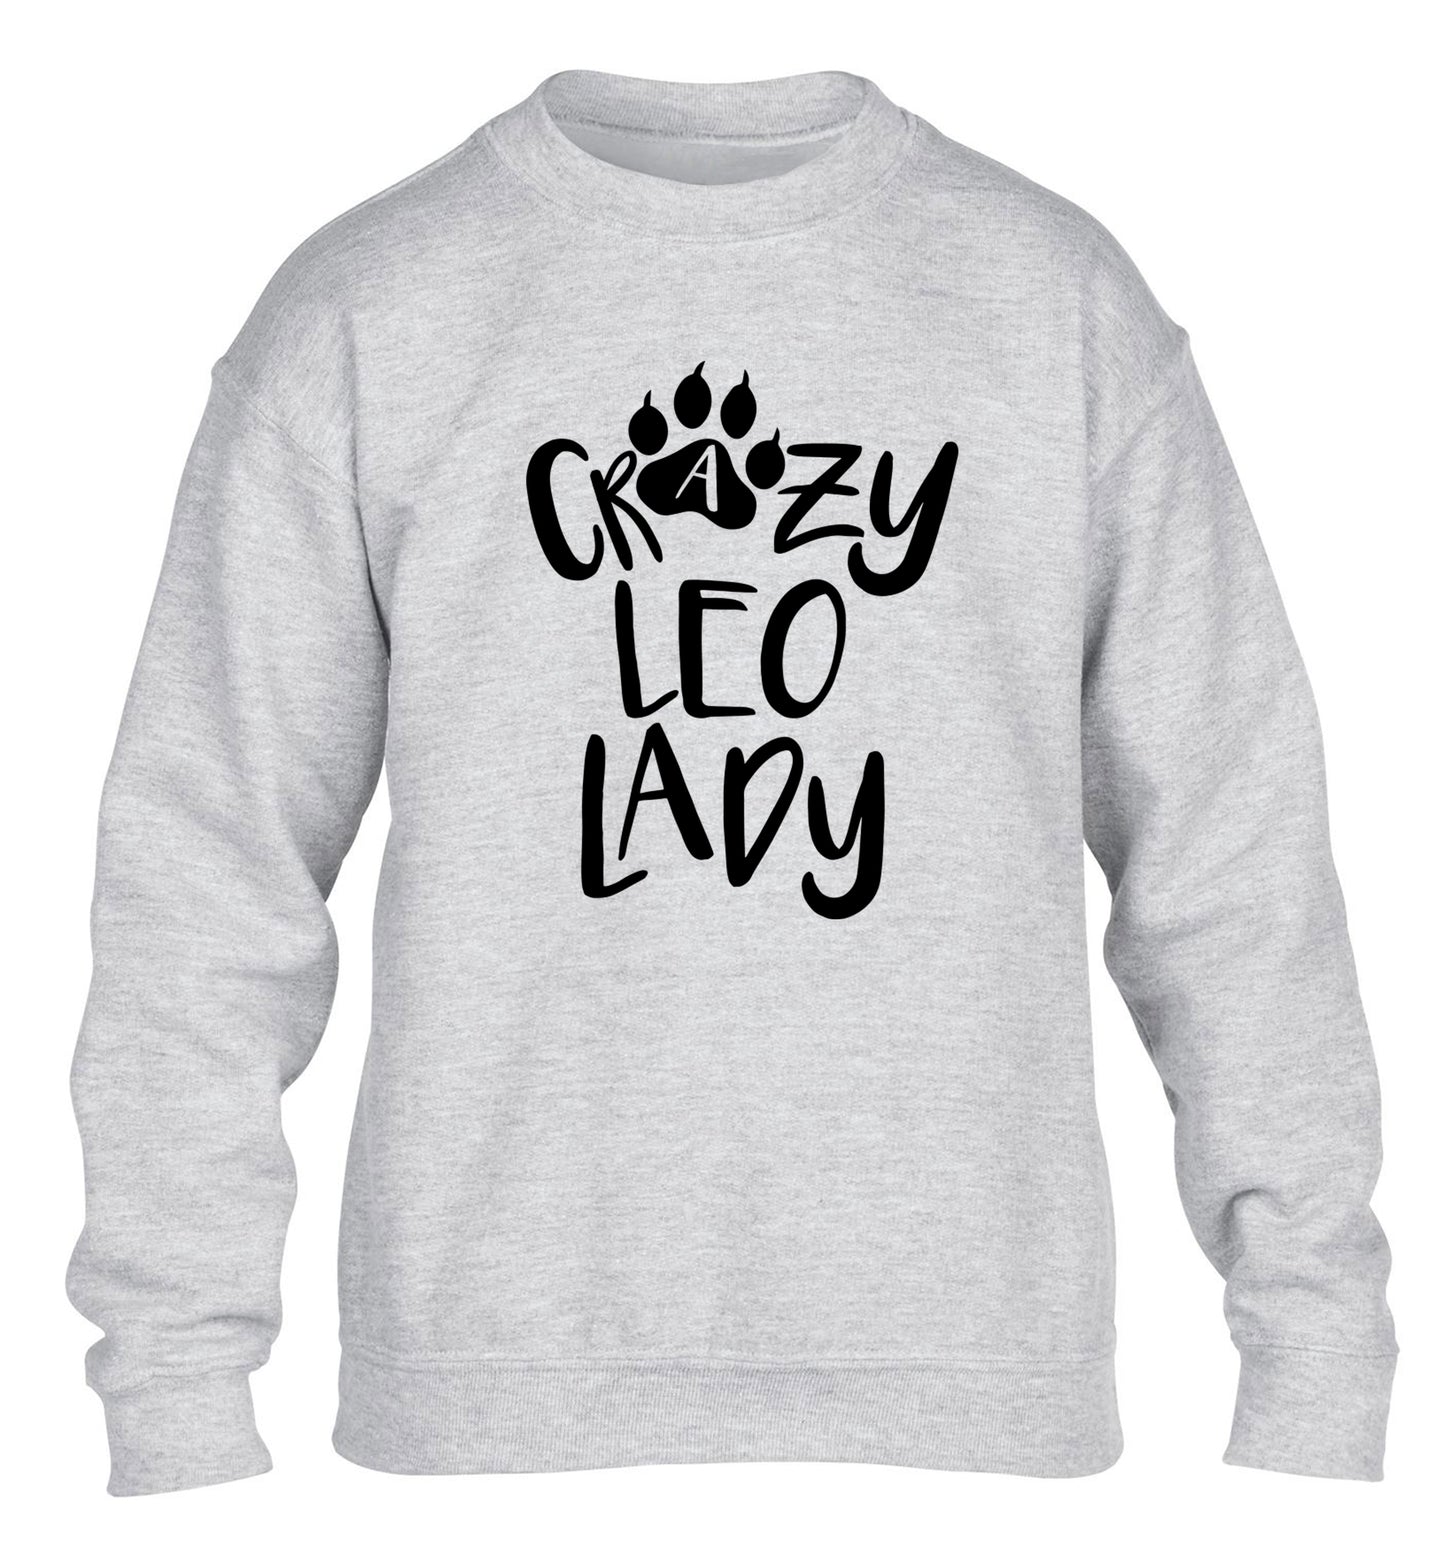 Crazy leo lady children's grey sweater 12-13 Years